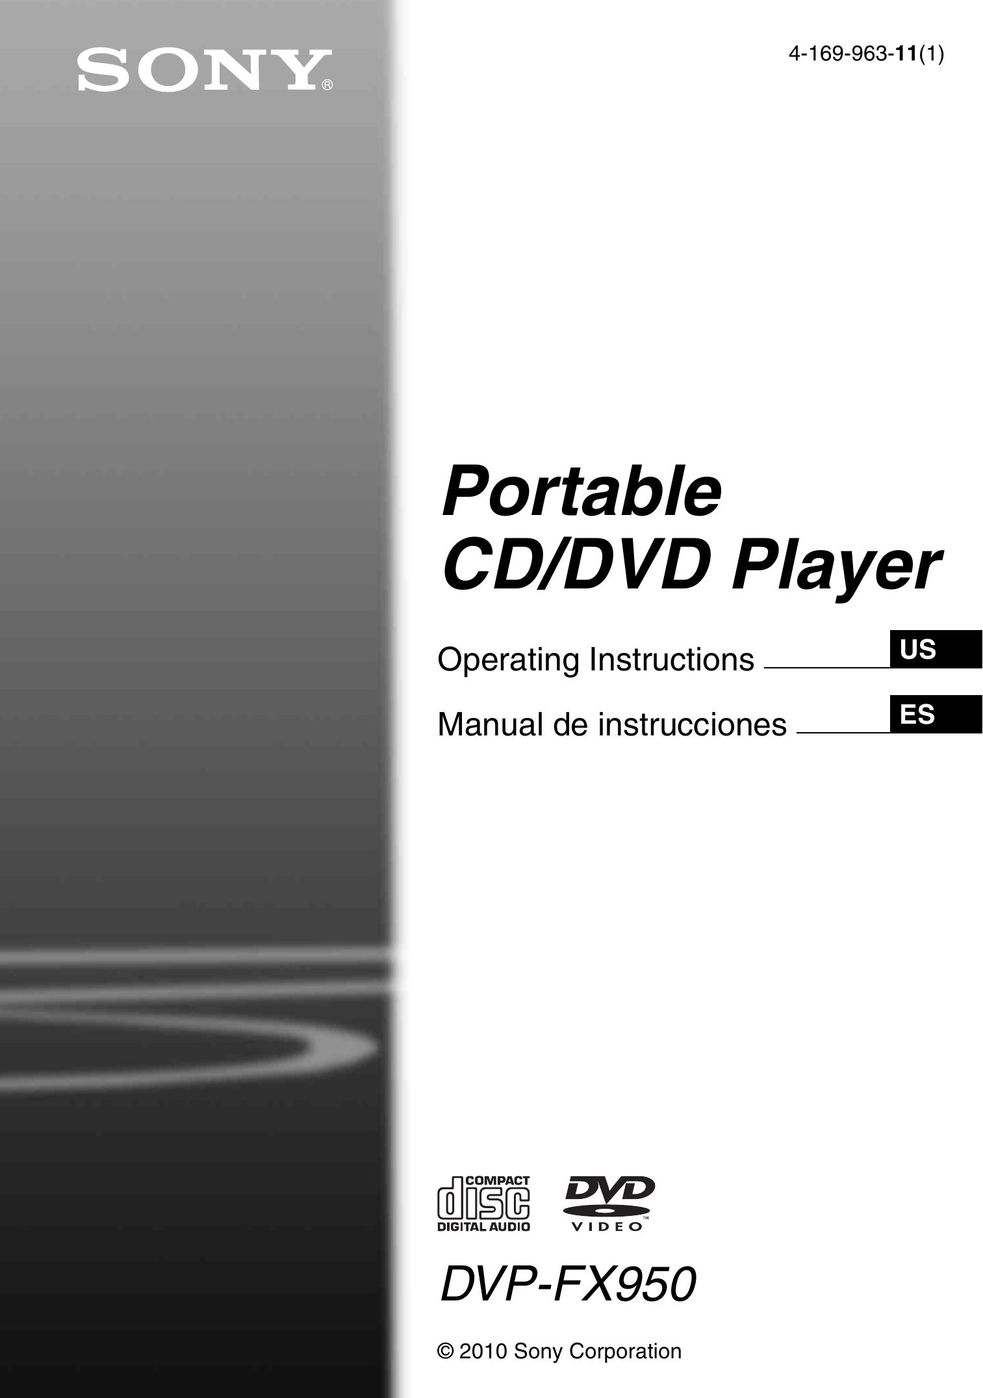 Sony DVP-FX950 Portable DVD Player User Manual